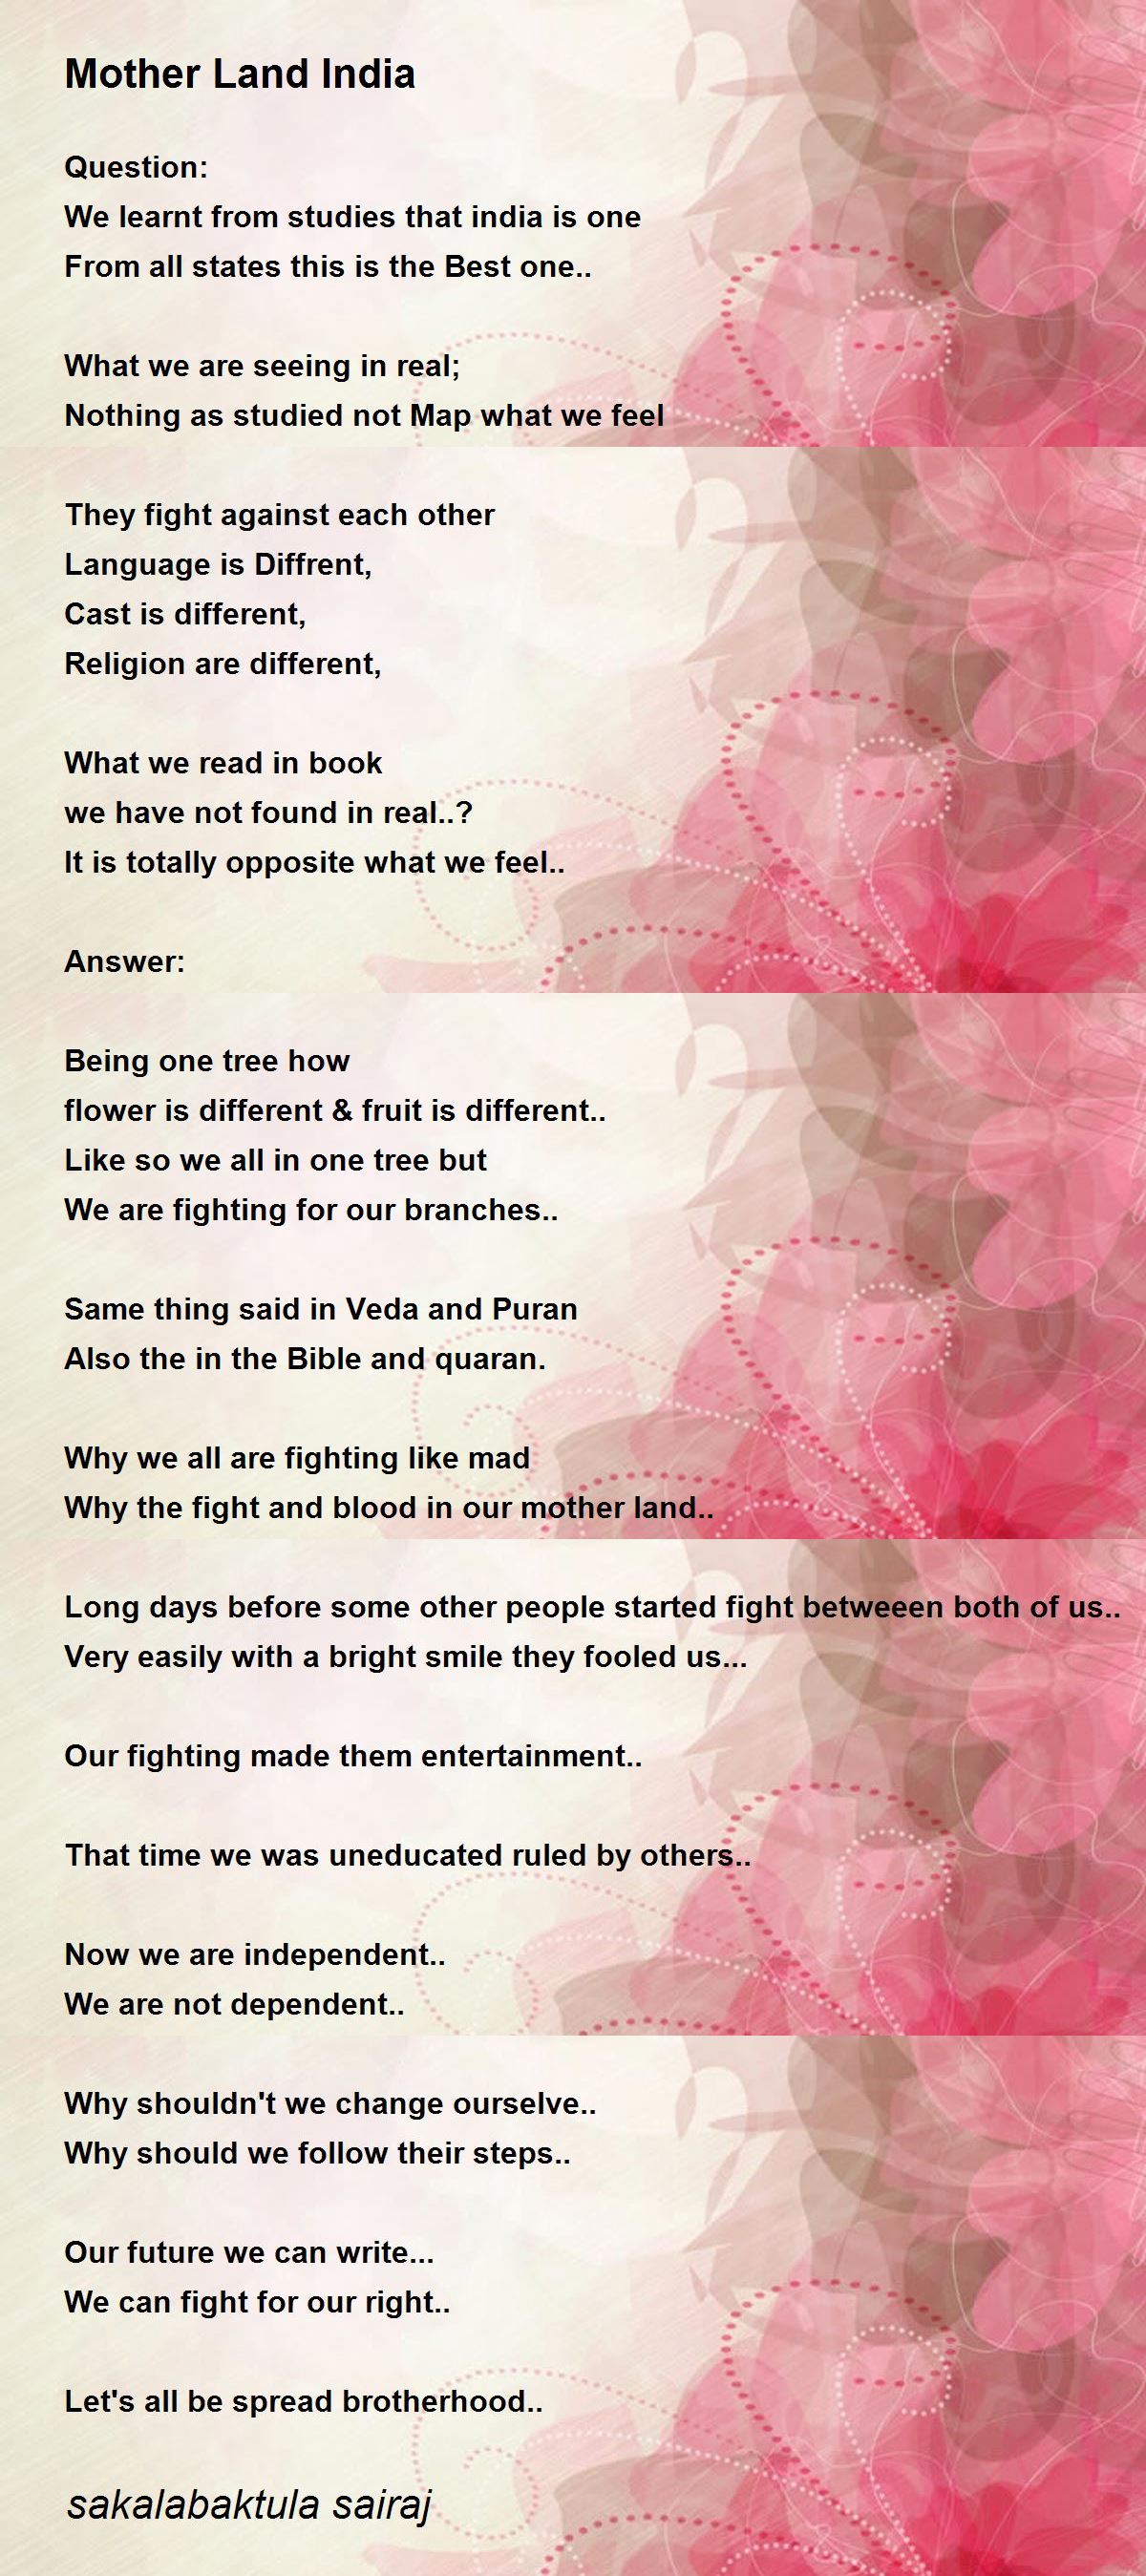 Mother Land India - Mother Land India Poem by sakalabaktula sairaj